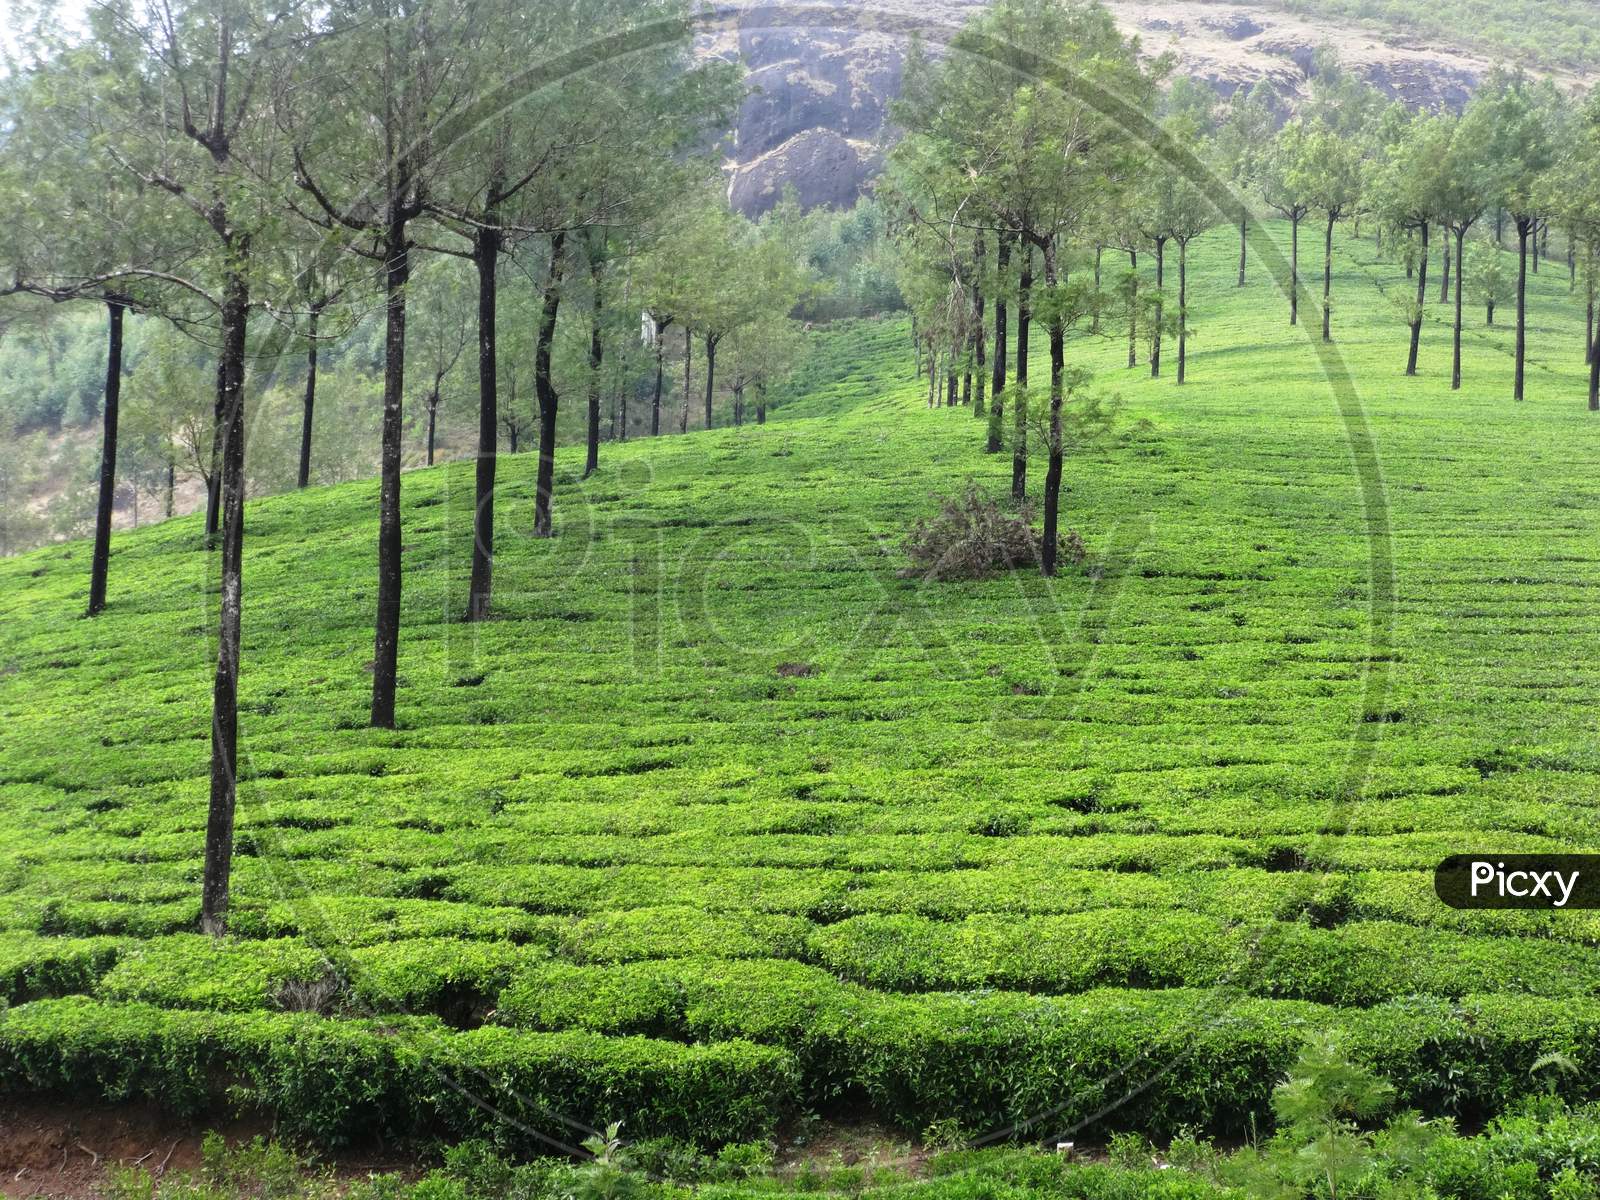 view of the tea gardens of Munnar